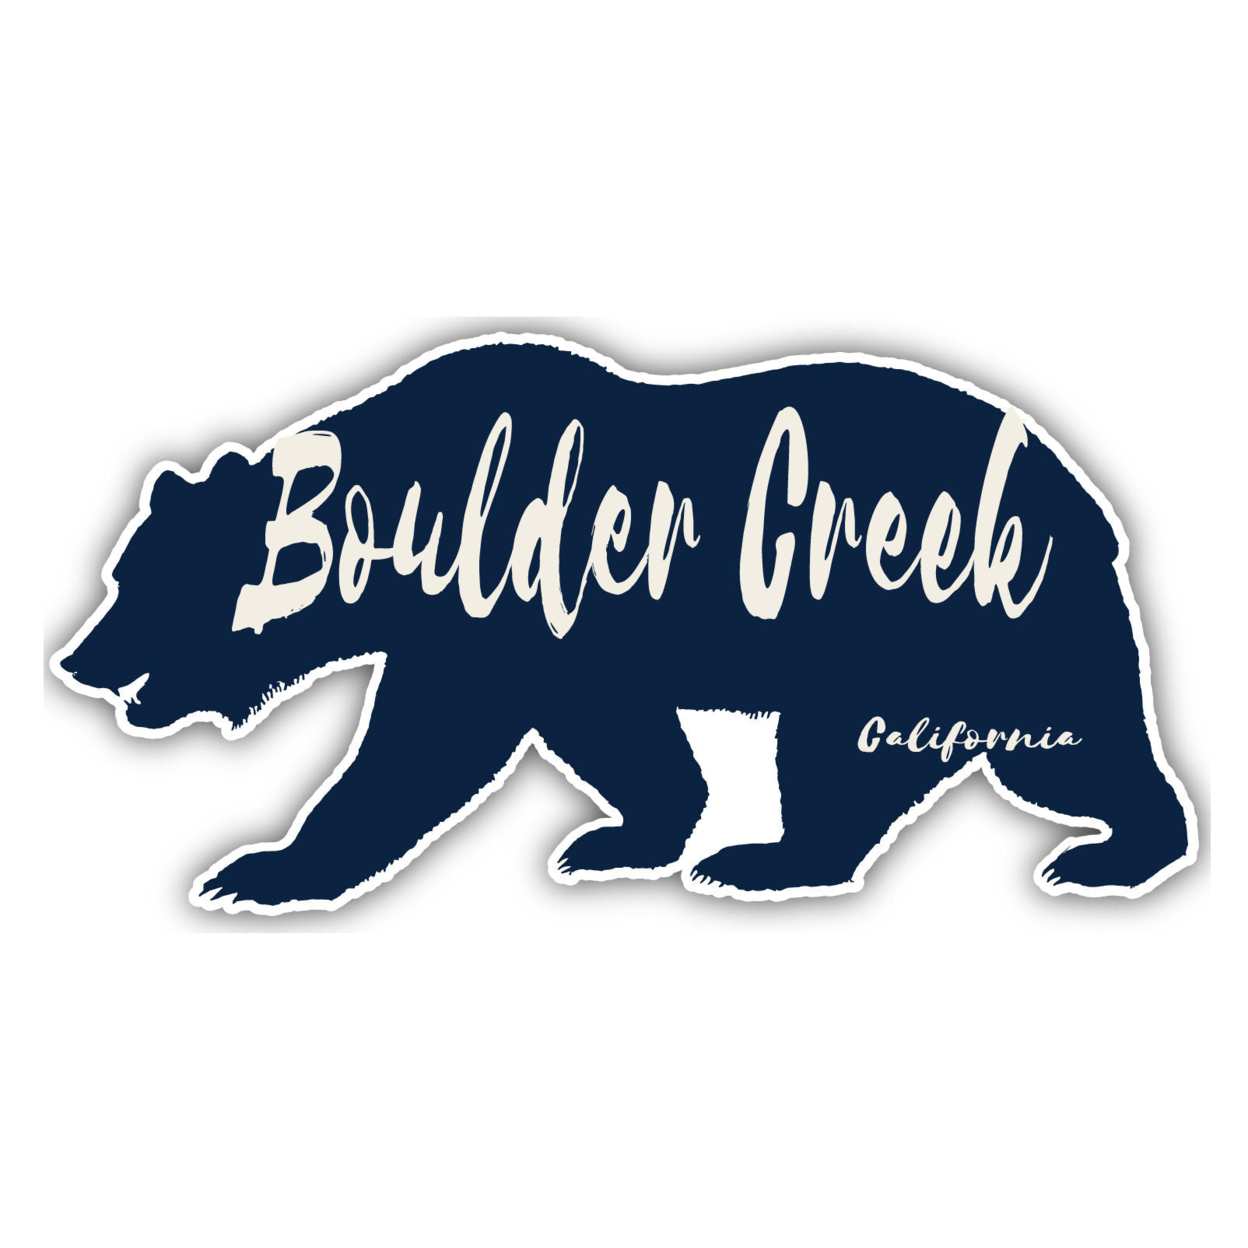 Boulder Creek California Souvenir Decorative Stickers (Choose Theme And Size) - Single Unit, 6-Inch, Bear